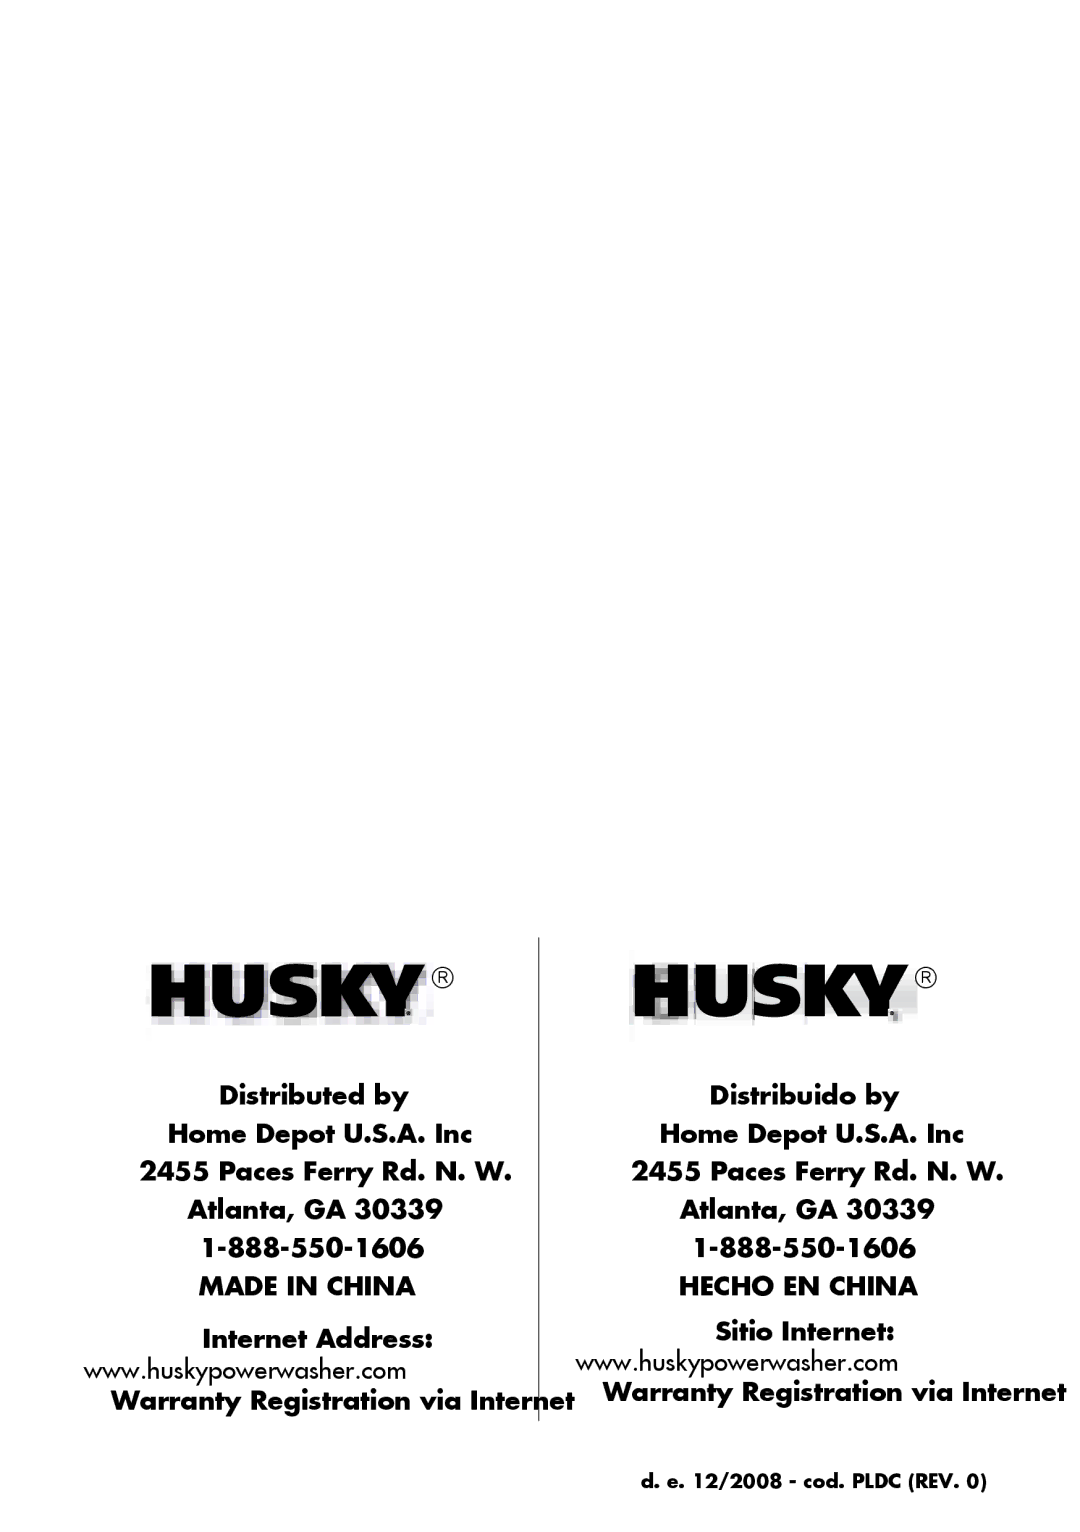 Husky H1600 warranty Hecho EN China 